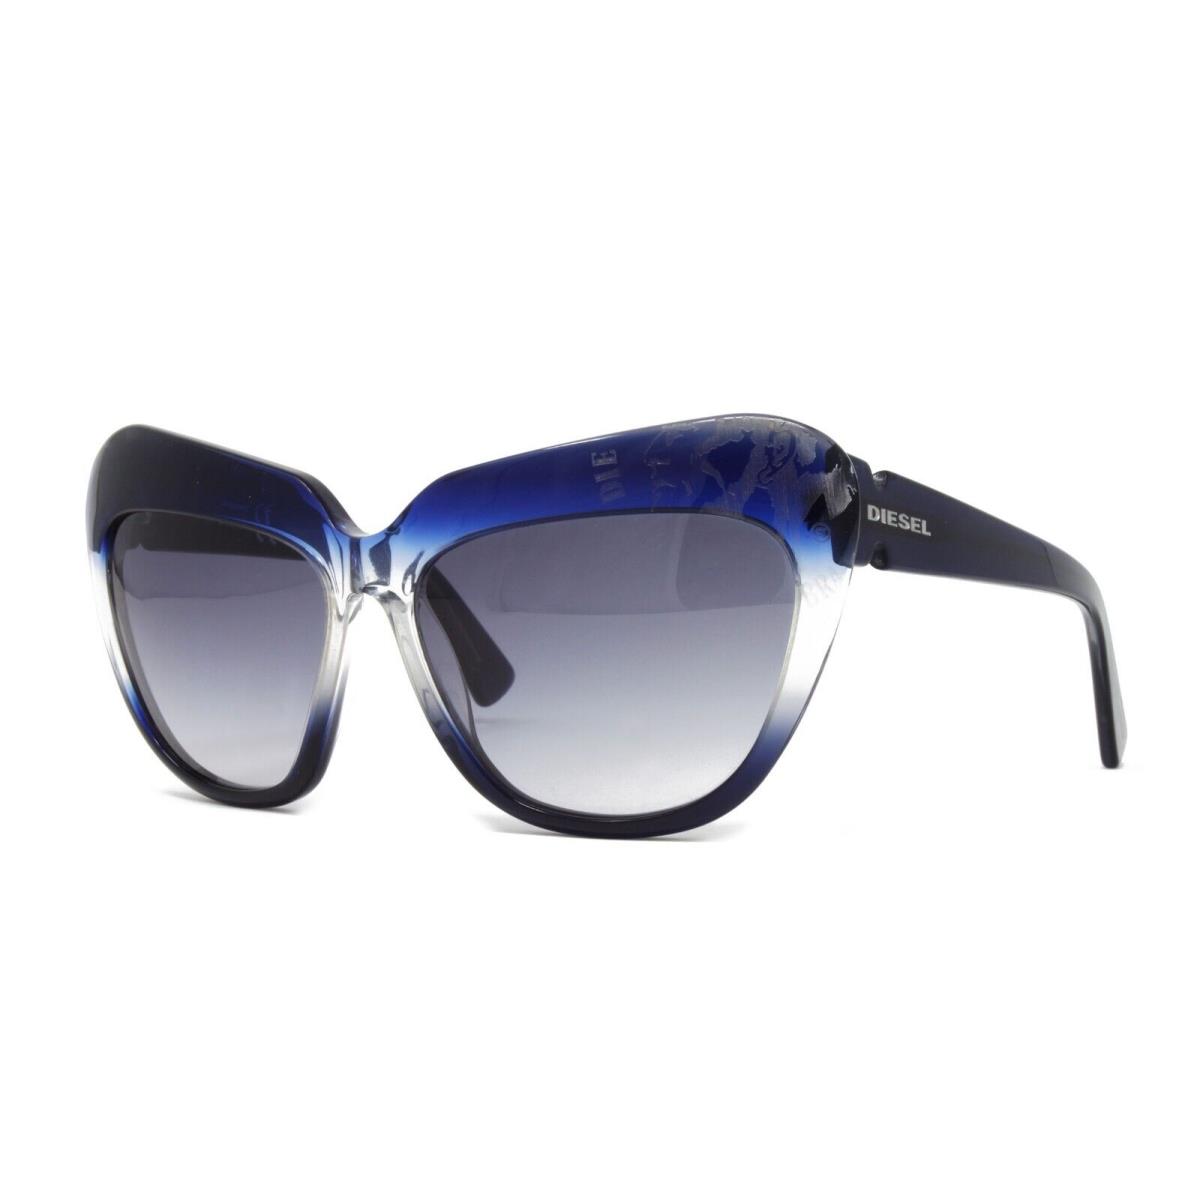 Diesel Women`s Cat Eye Sunglasses DL0047 92W Blue Gradient 59mm Gray Lens